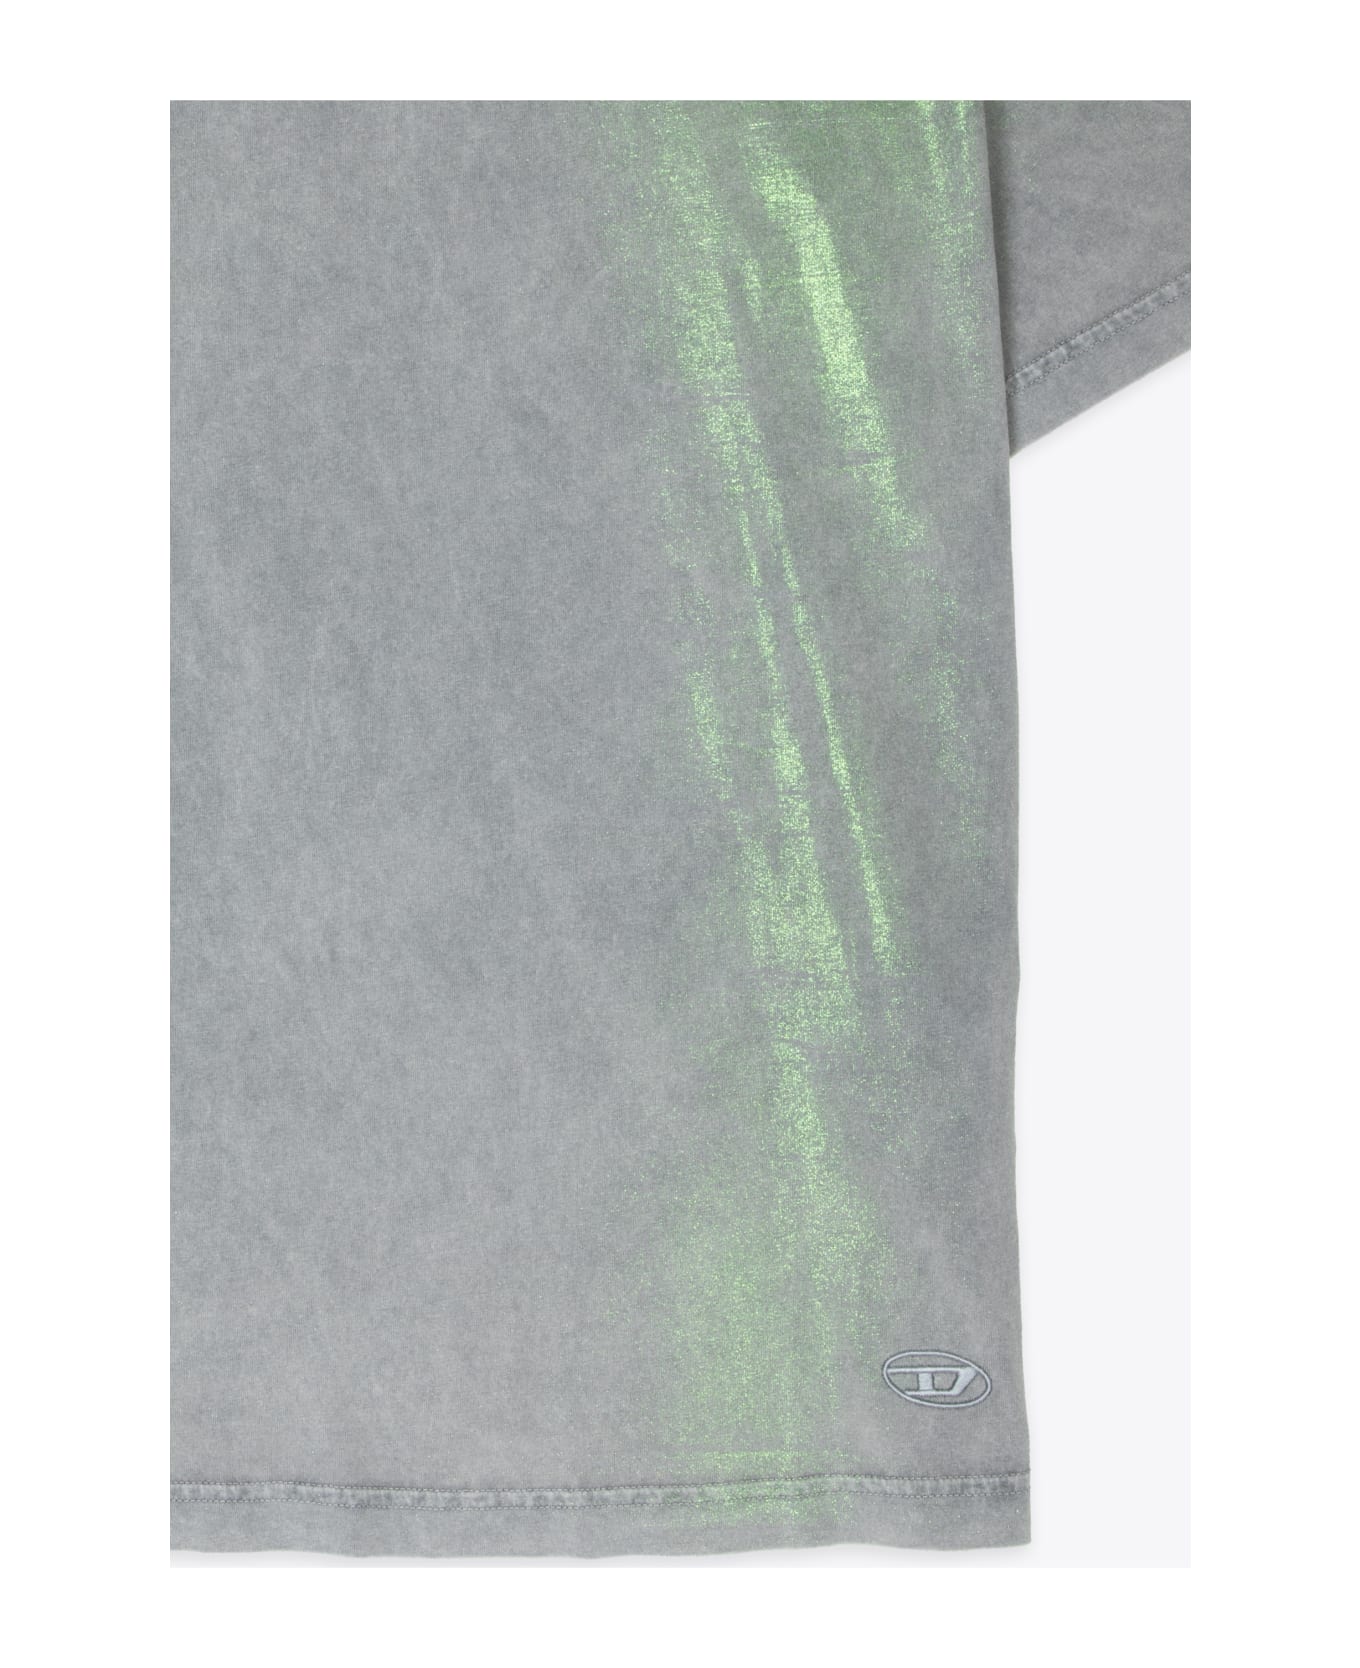 Diesel T-buxt Grey viscose jersey t-shirt with green metallic finiture - T Buxt - Grigio